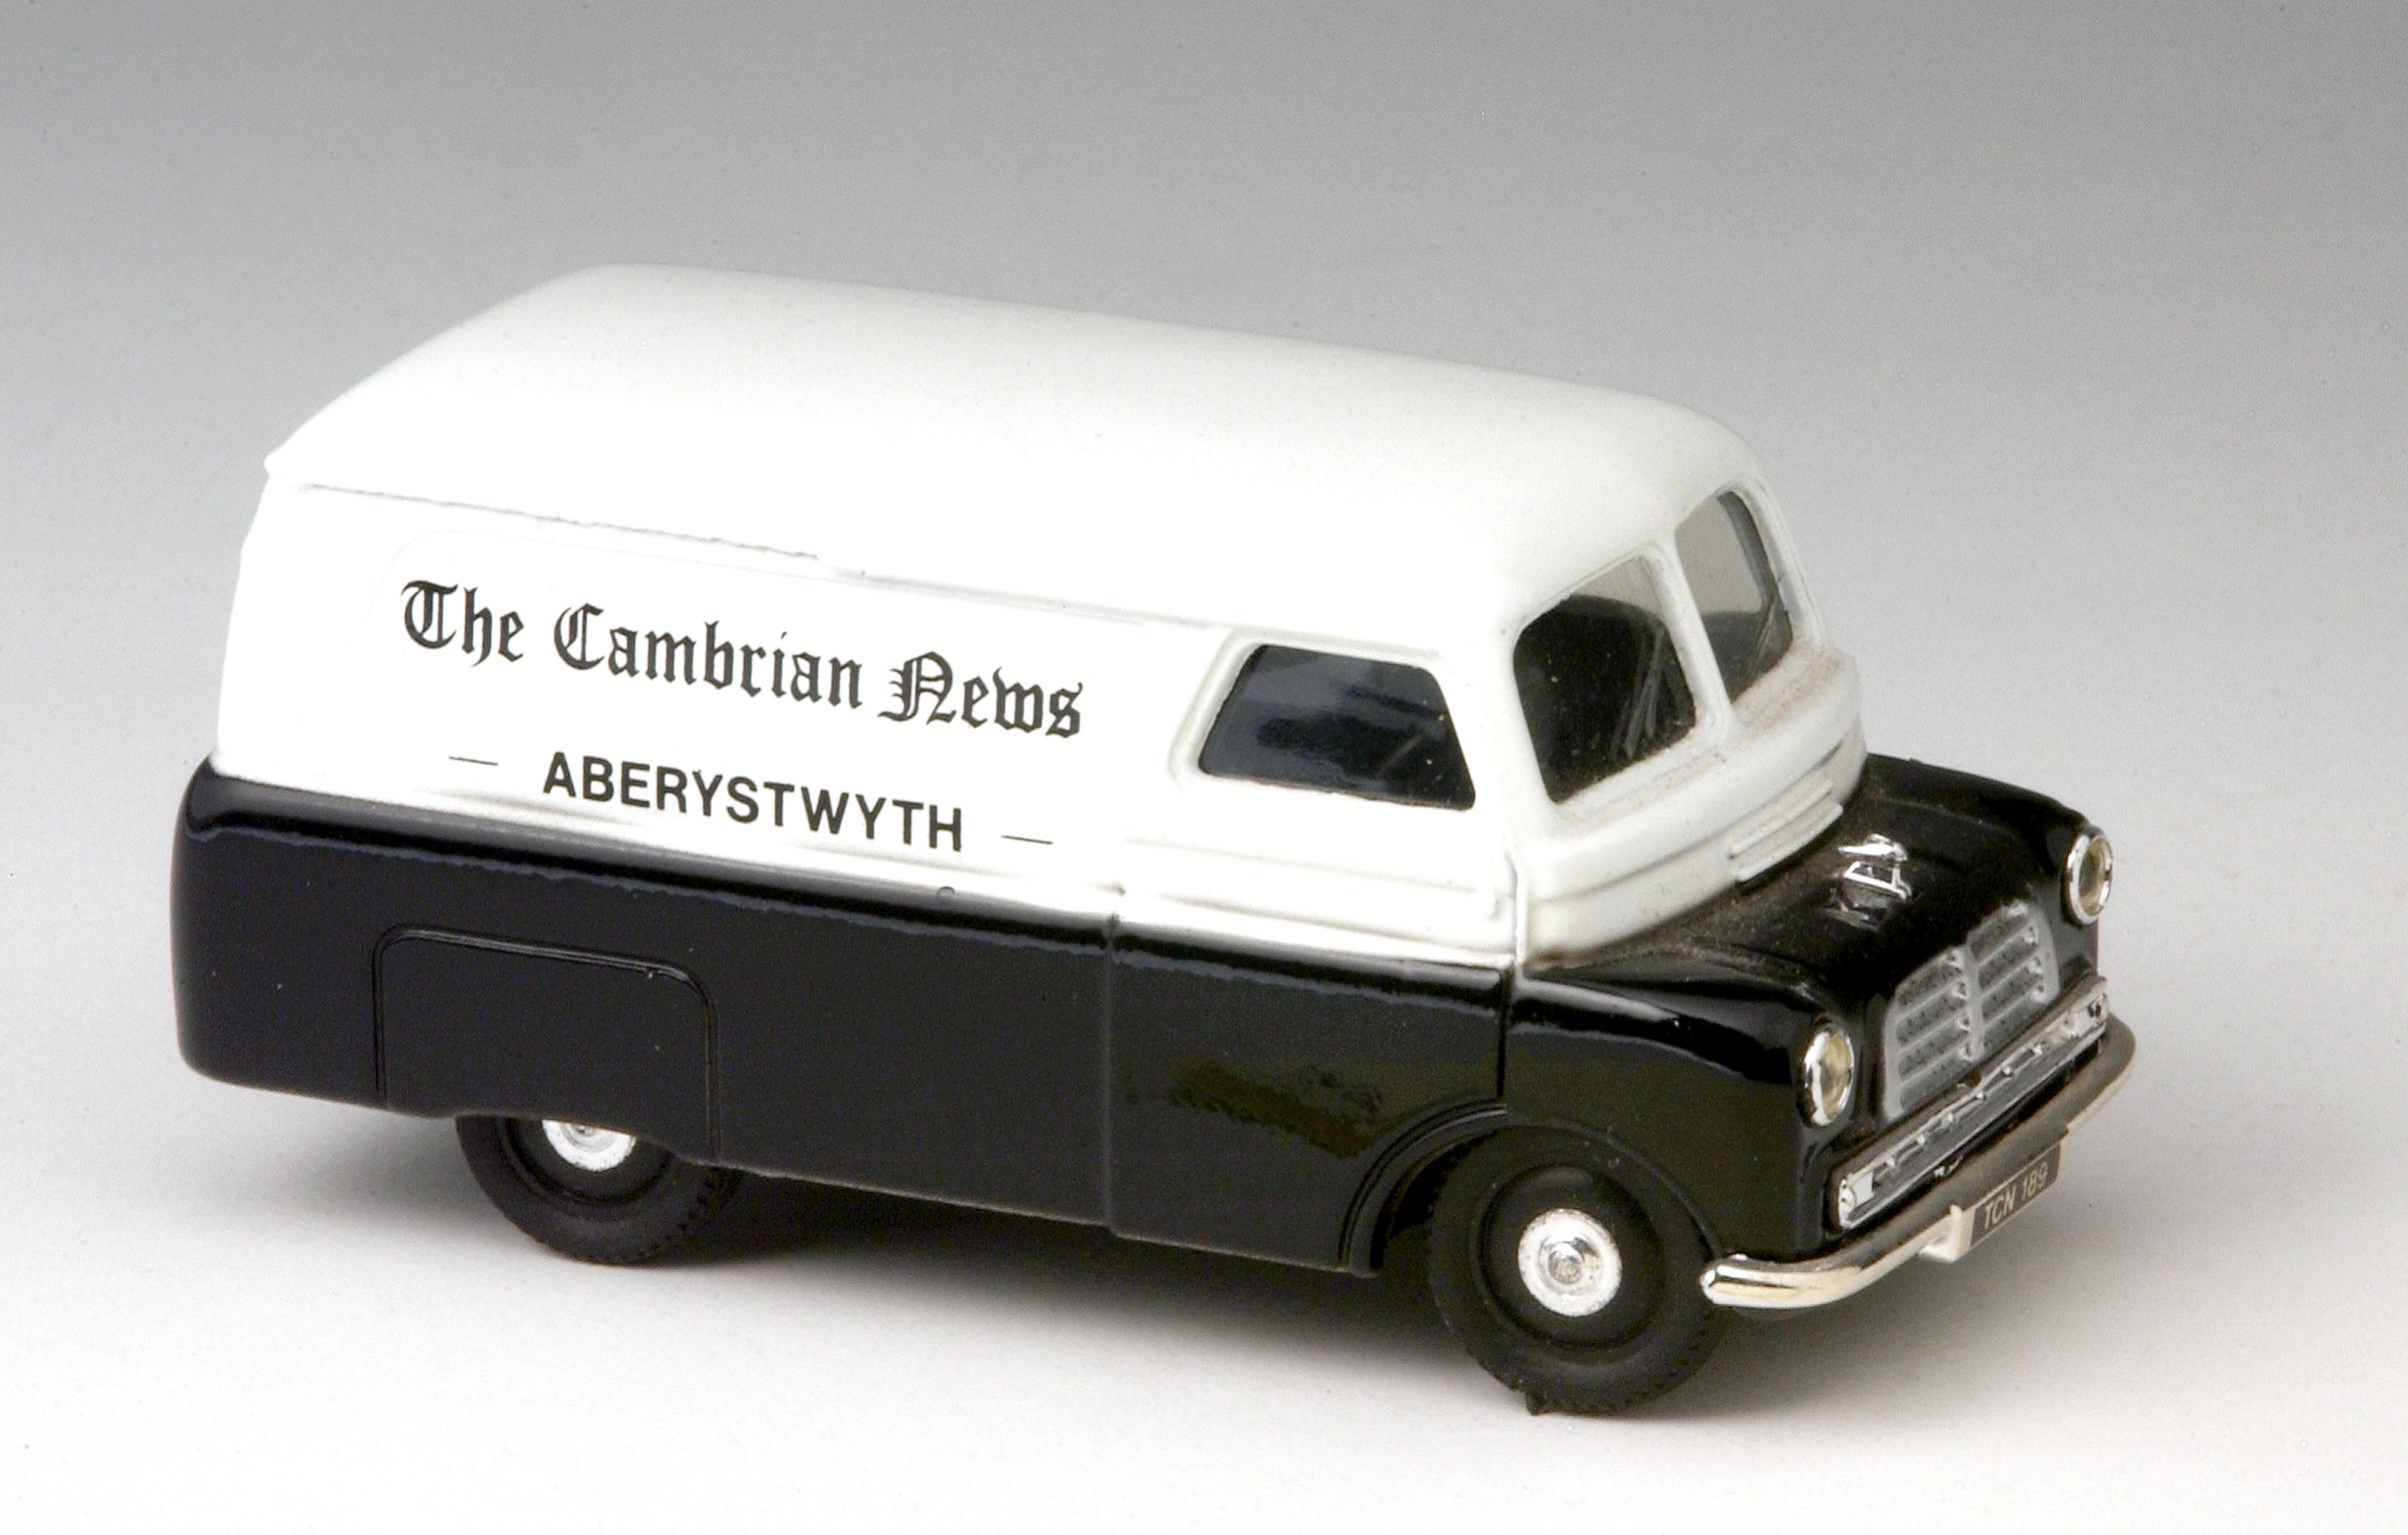 The Cambrian News, Aberystwyth, Bedford van model